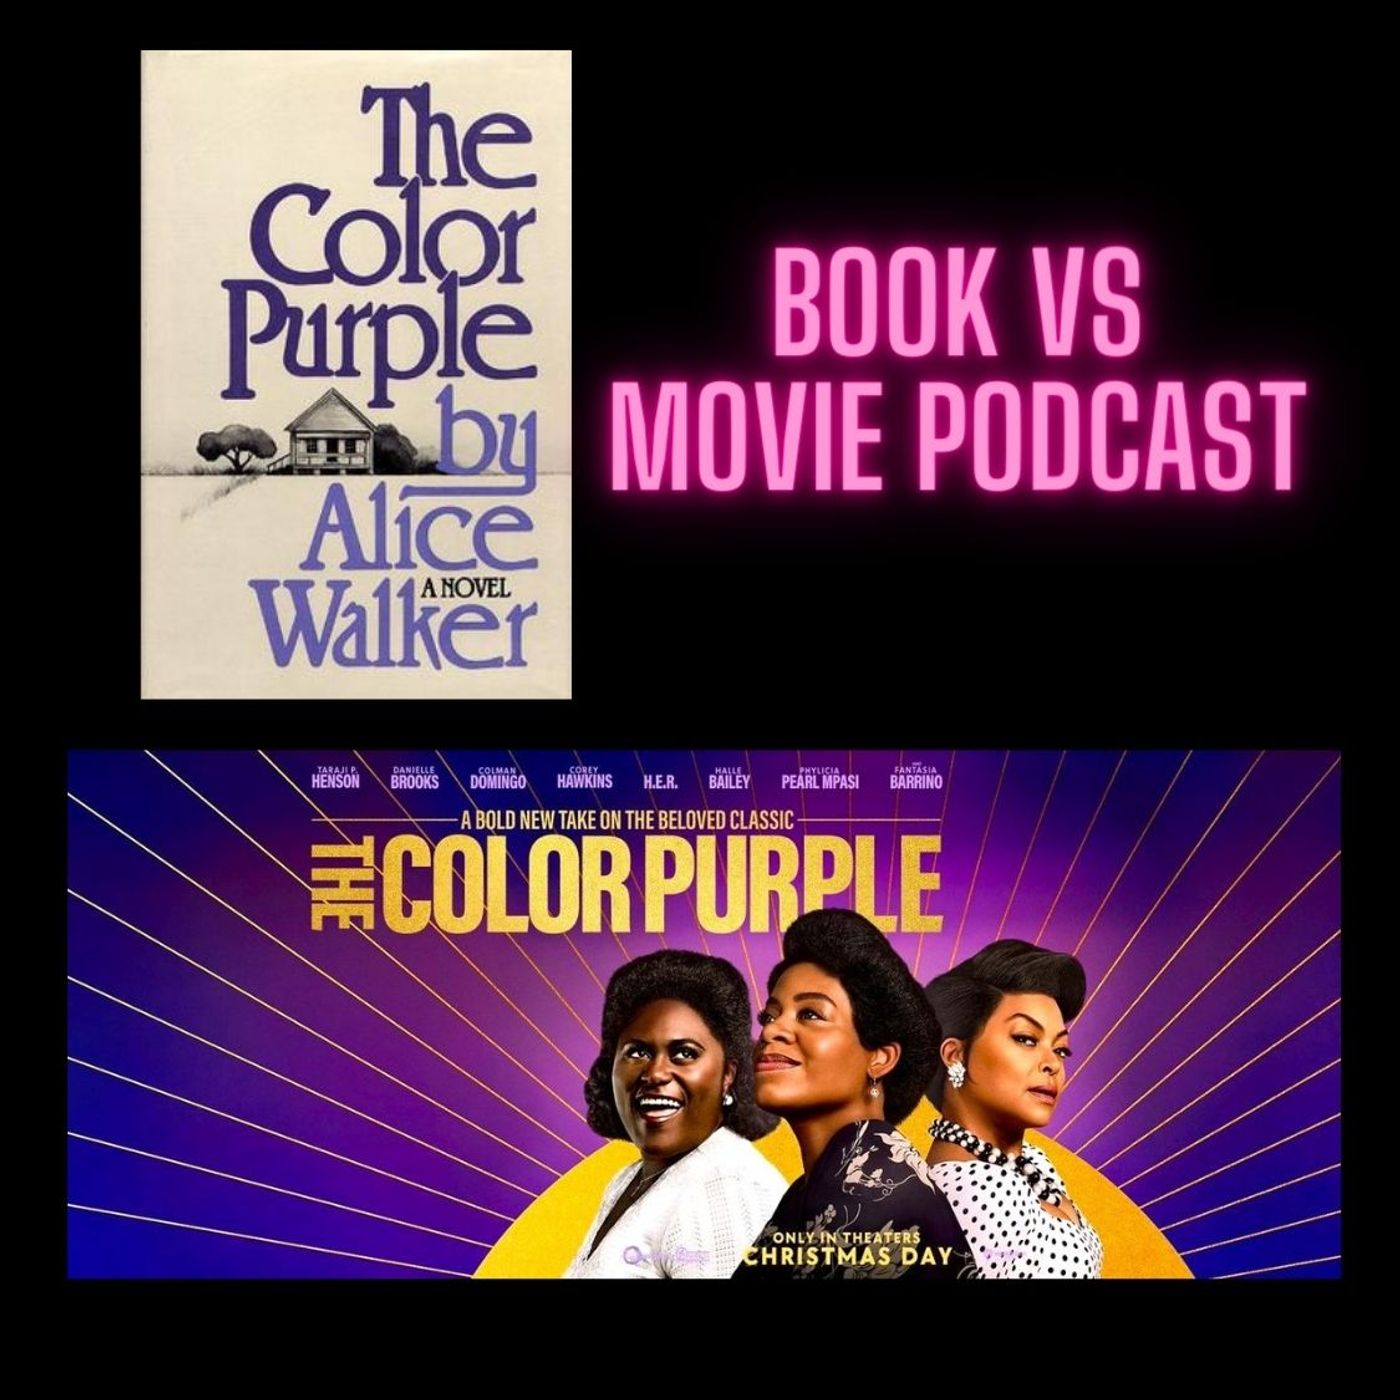 The Color Purple (2023) Fantasia Barrino, Taraji P. Henson, & Danielle Brooks